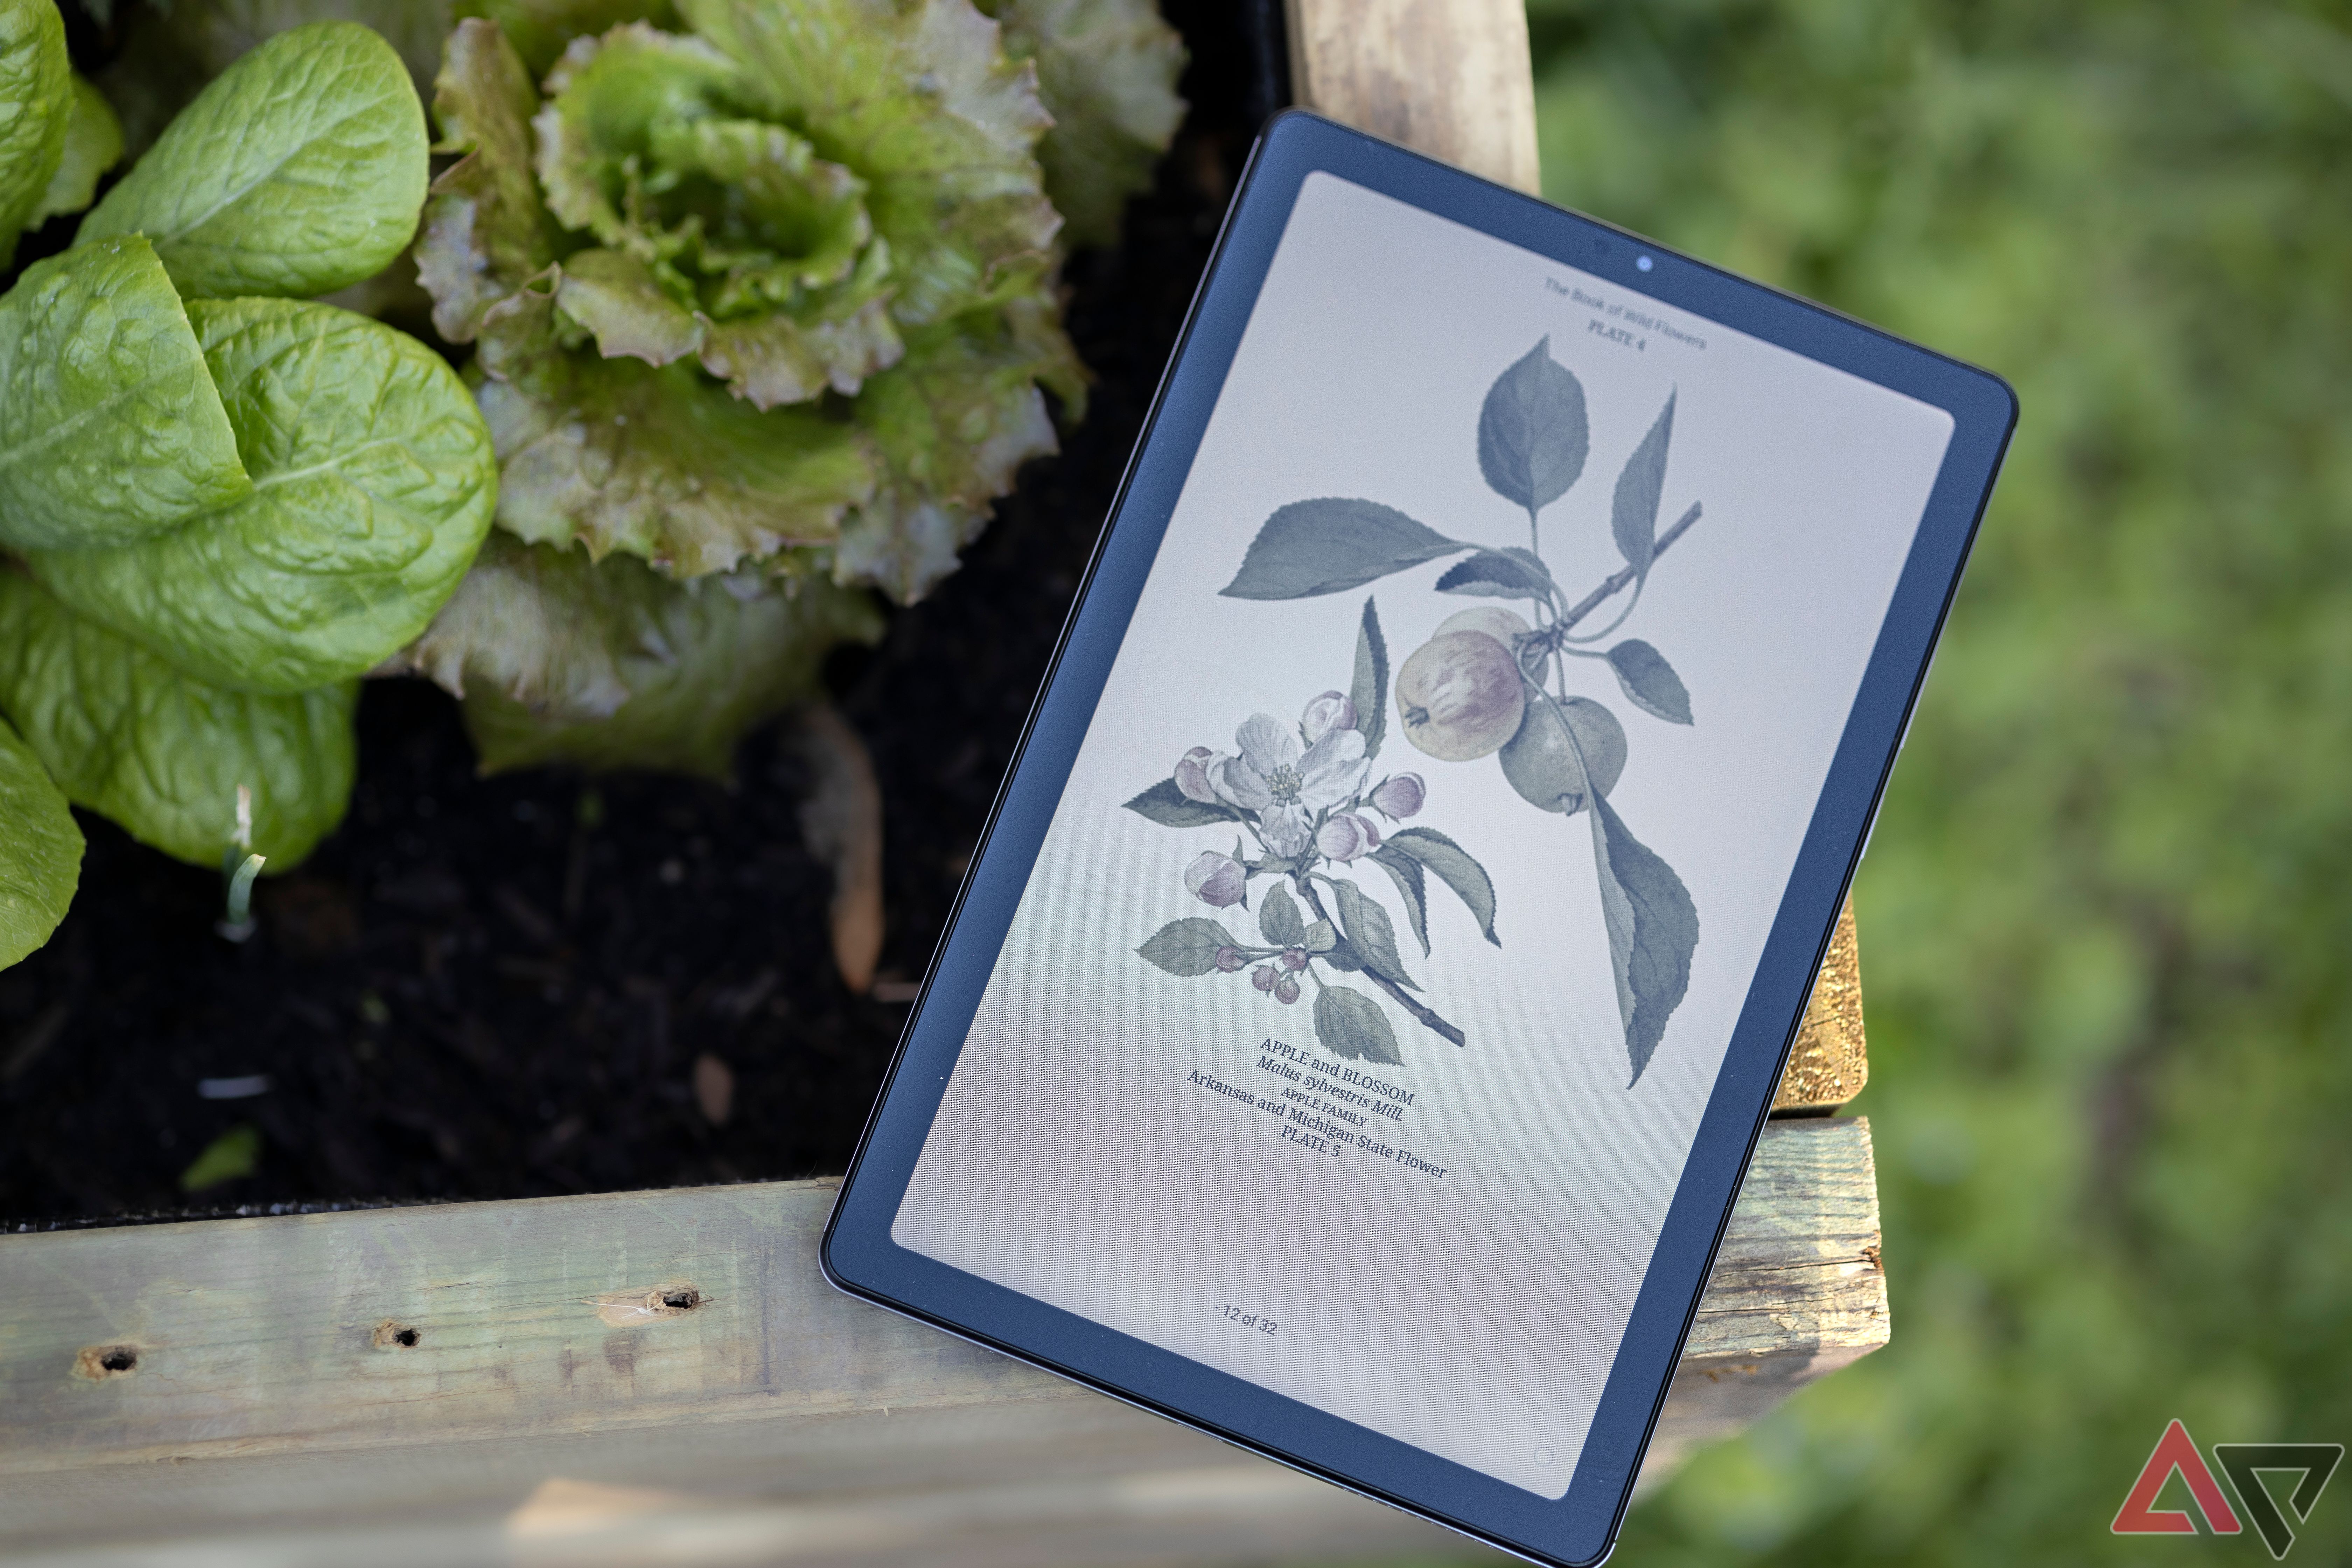 Recanto 9" Lenovo Tablet aberto para reserva de flores silvestres ao lado do jardim